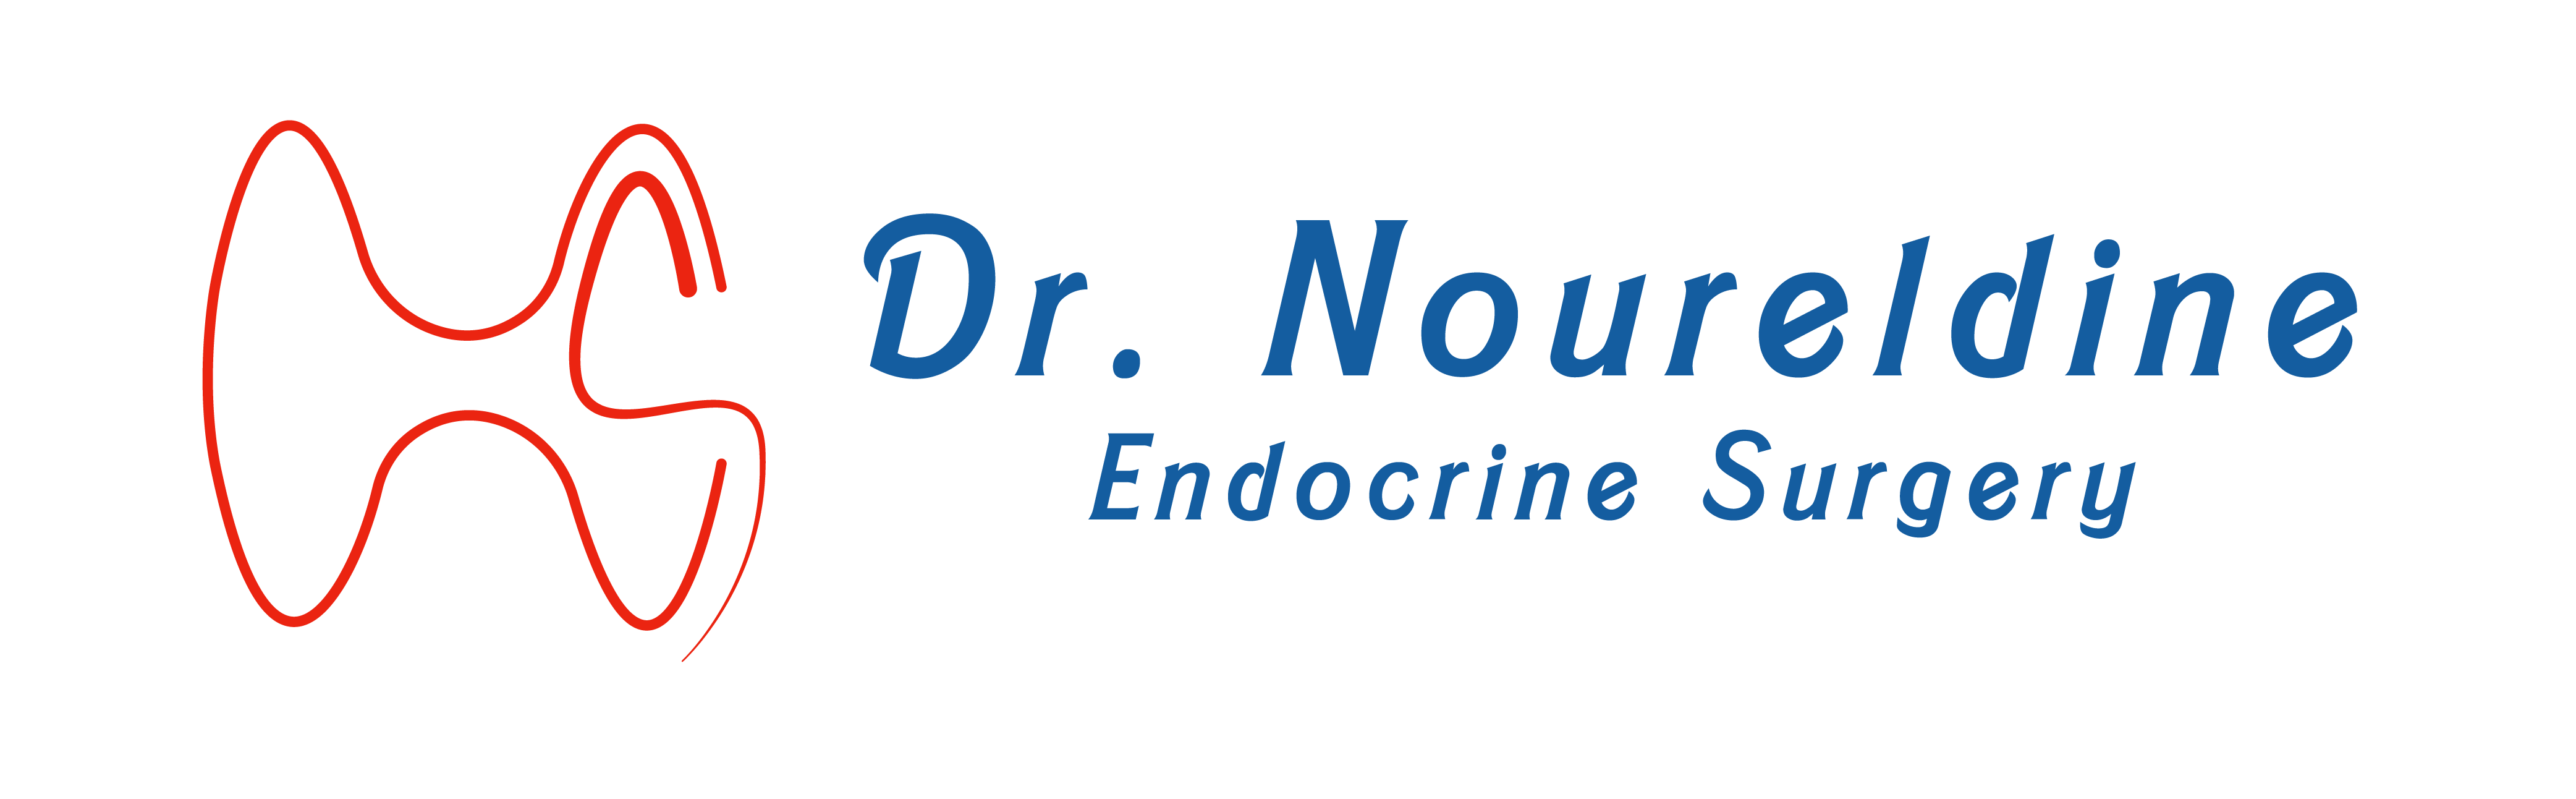 dr noureldine endocrine surgery 